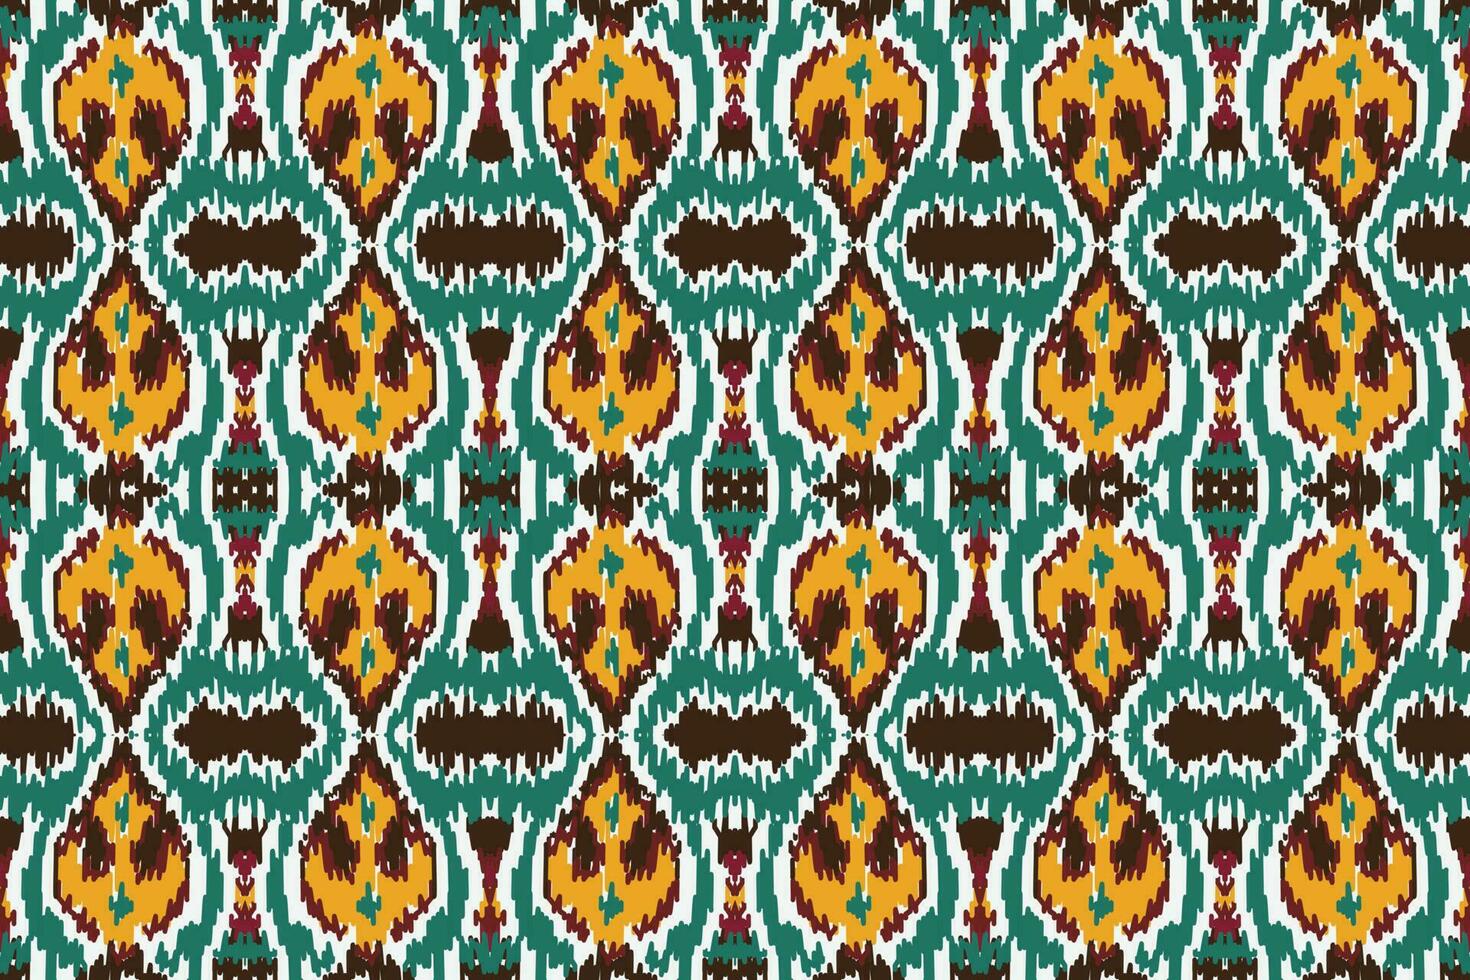 africano ikat floral paisley bordado fundo. geométrico étnico oriental padronizar tradicional. ikat flor estilo abstrato vetor ilustração. Projeto para impressão textura, tecido, saree, sari, tapete.